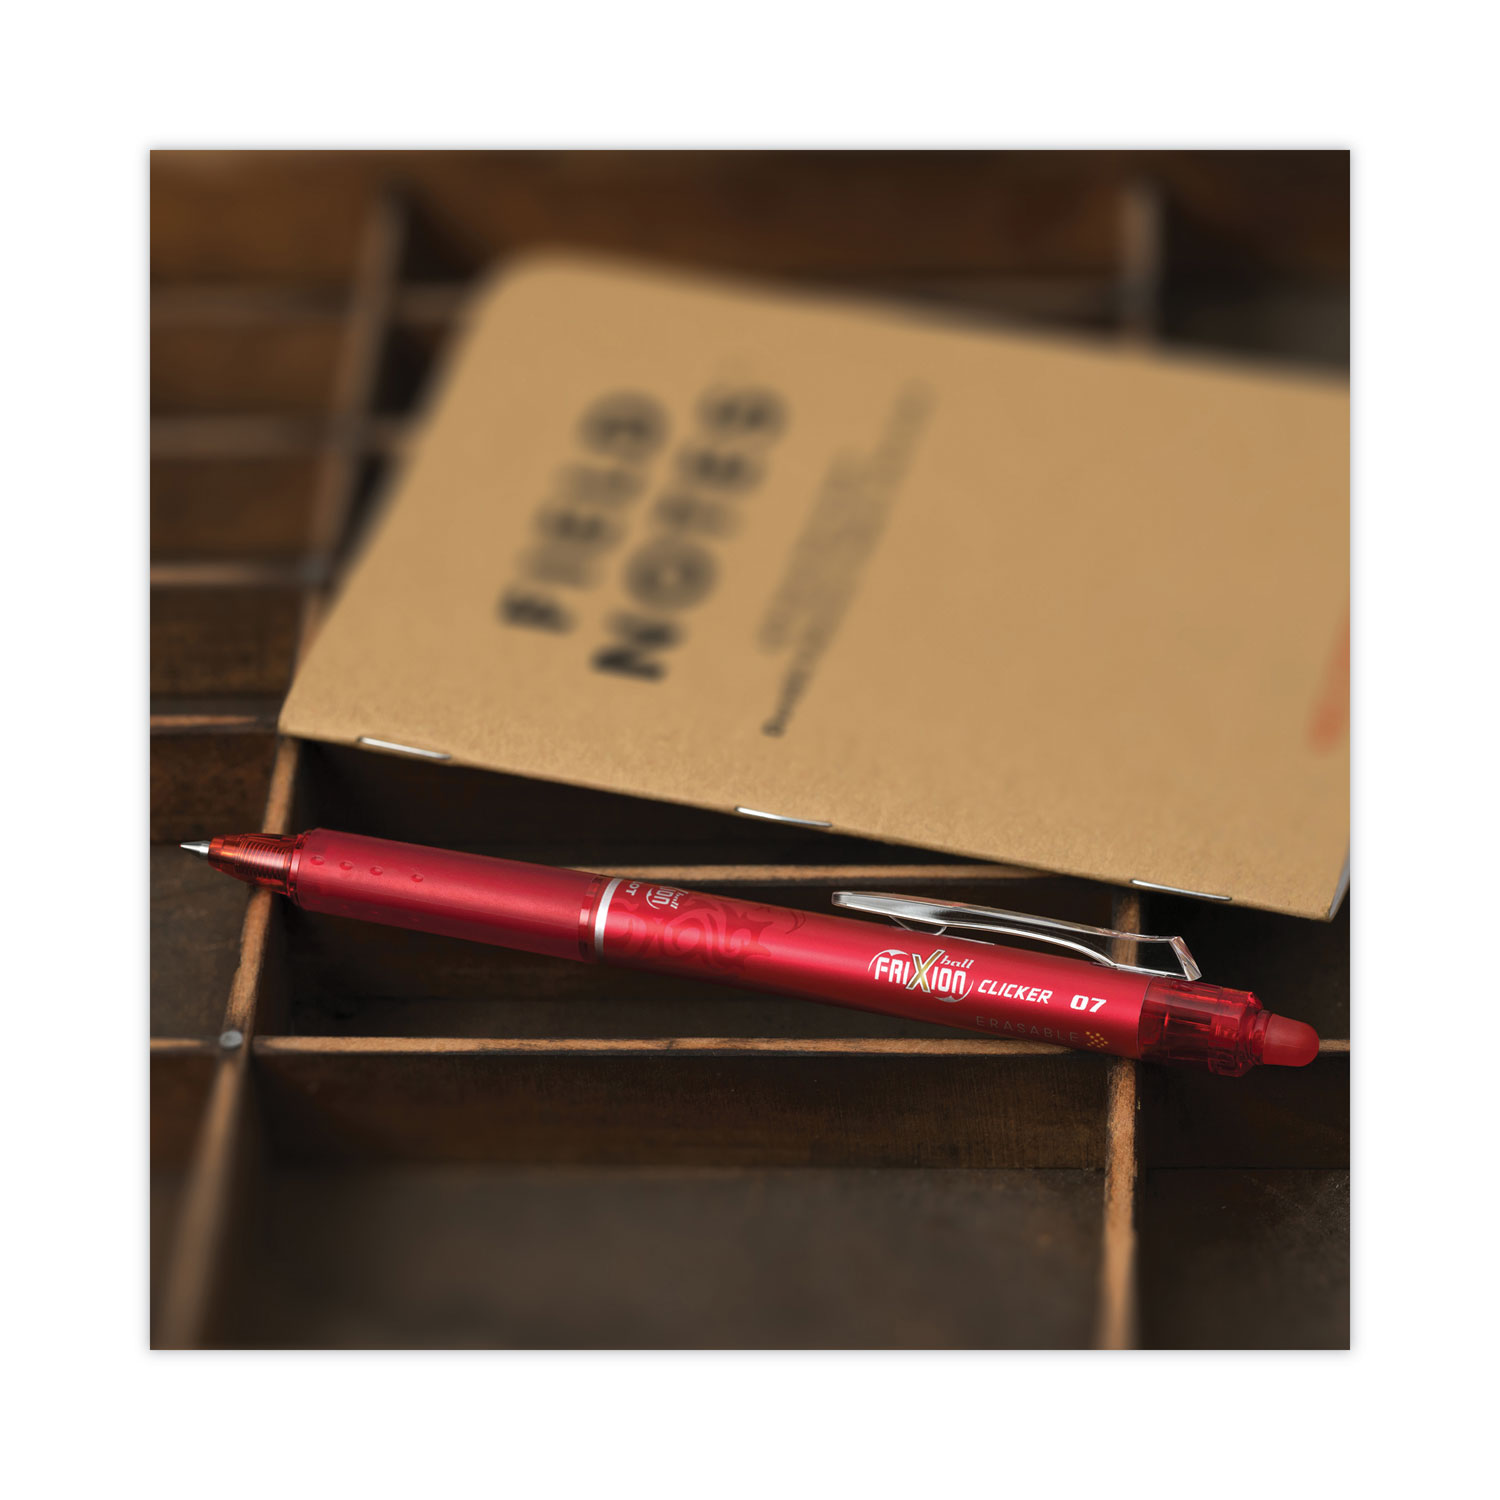 Pilot Frixion Clicker Erasable Gel Ink Retractable Pen, Assorted Ink, .7mm - 7 pack